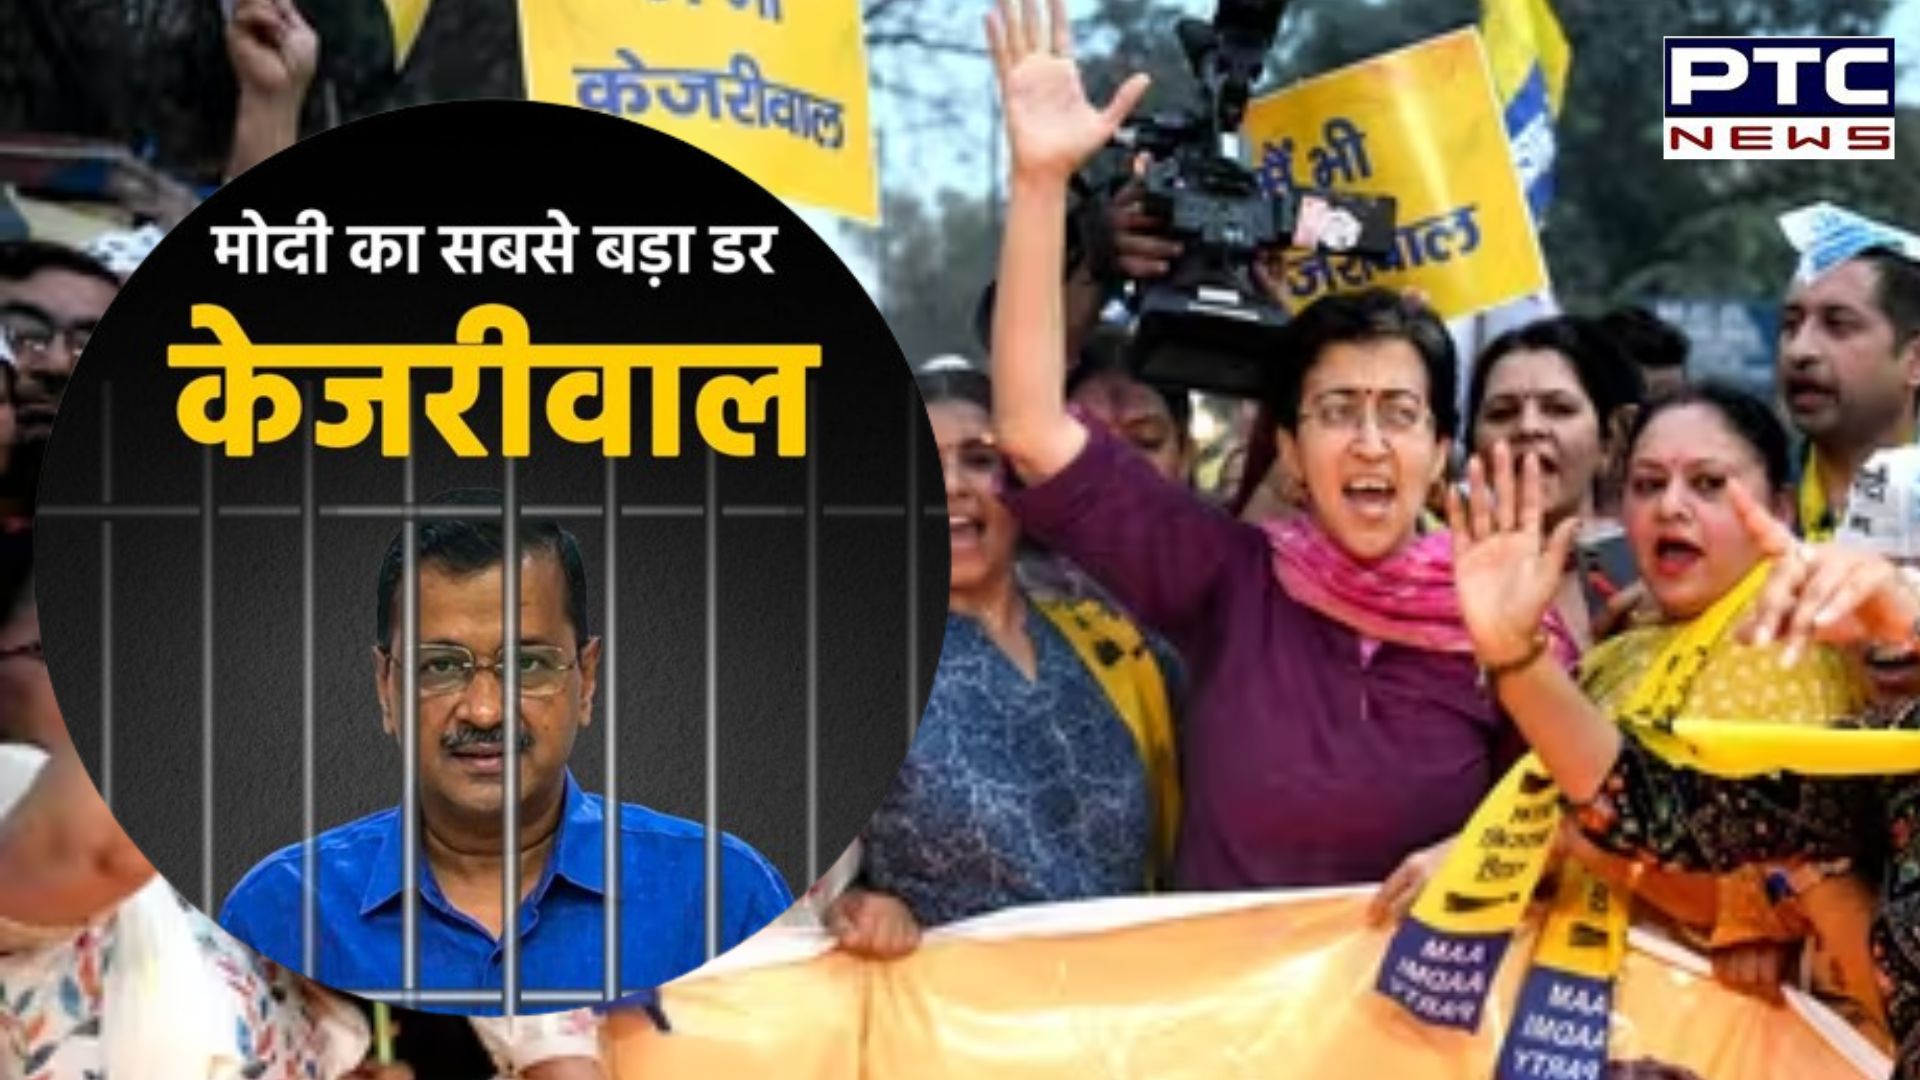 'Modi ka sabse bada dar': AAP launches social media ‘DP campaign’ against Kejriwal's arrest